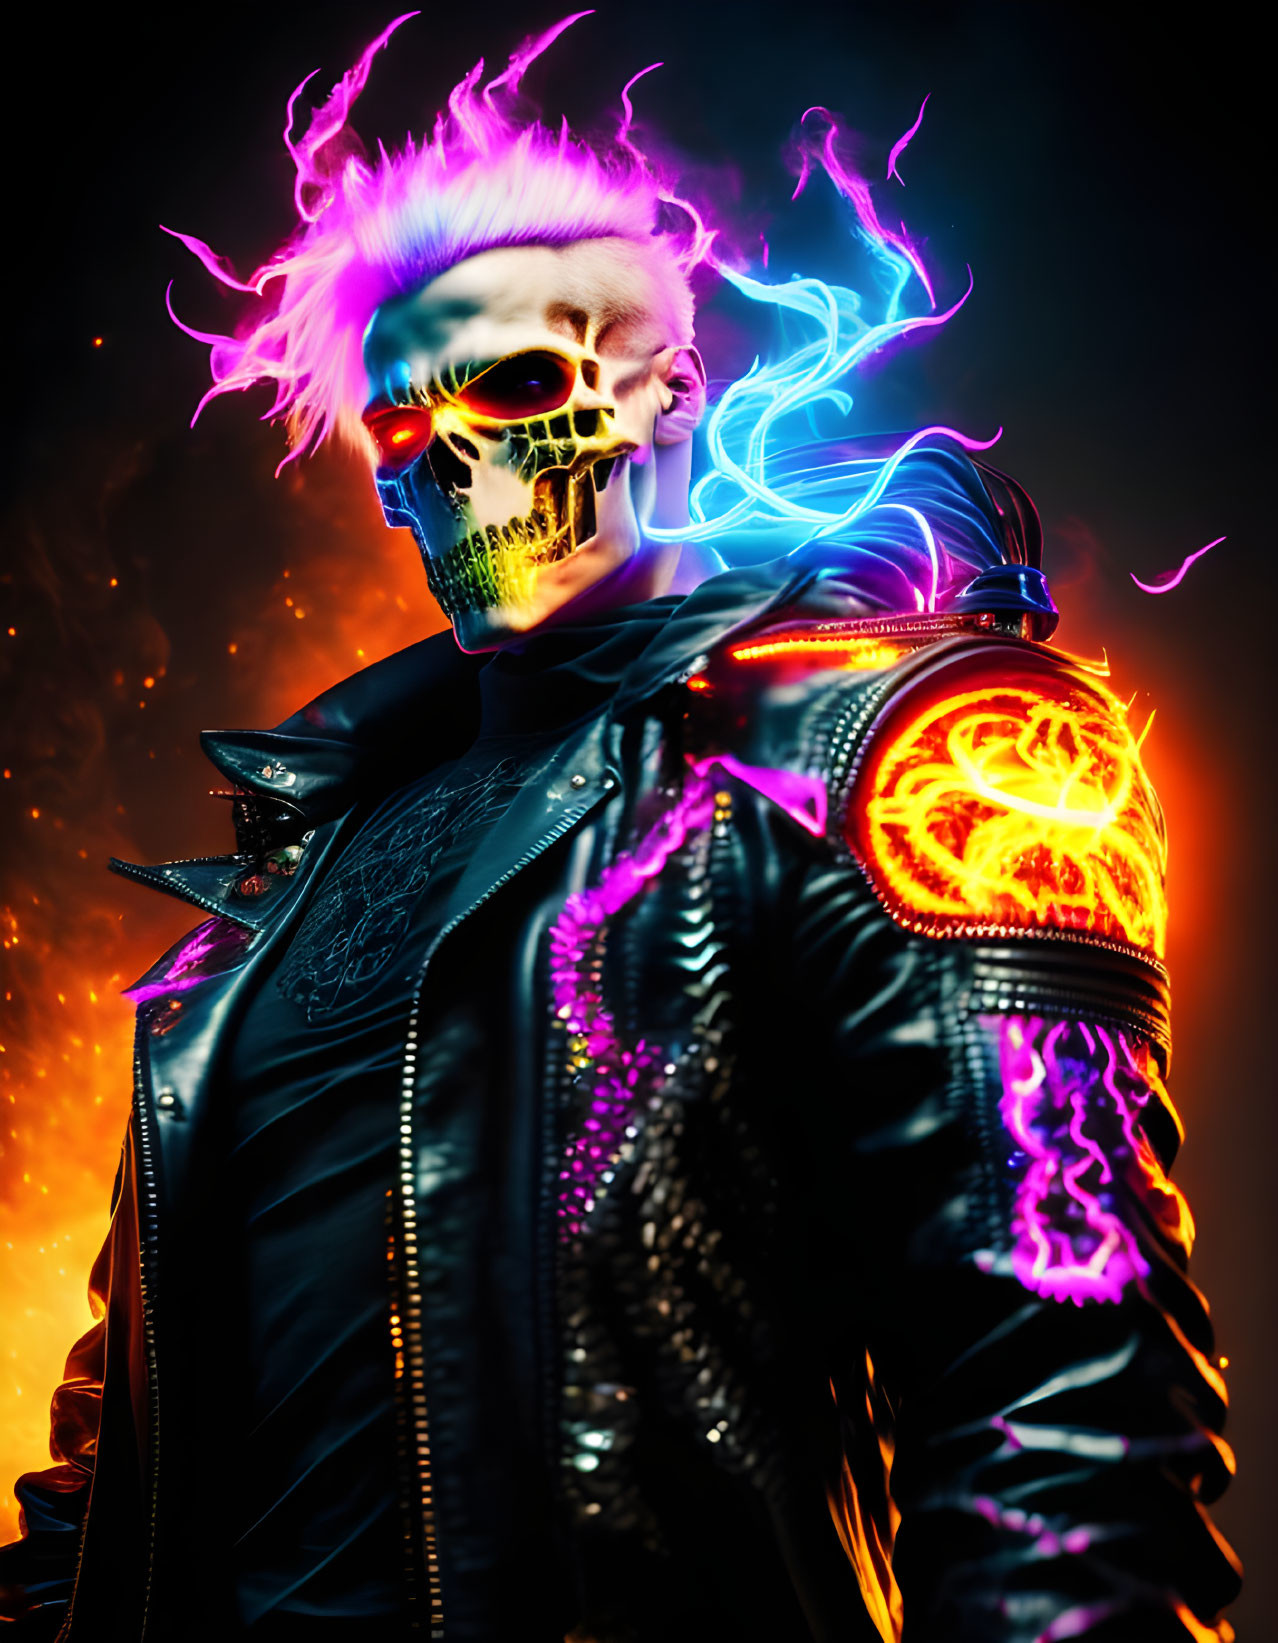 Cyberpunk ghost-rider 